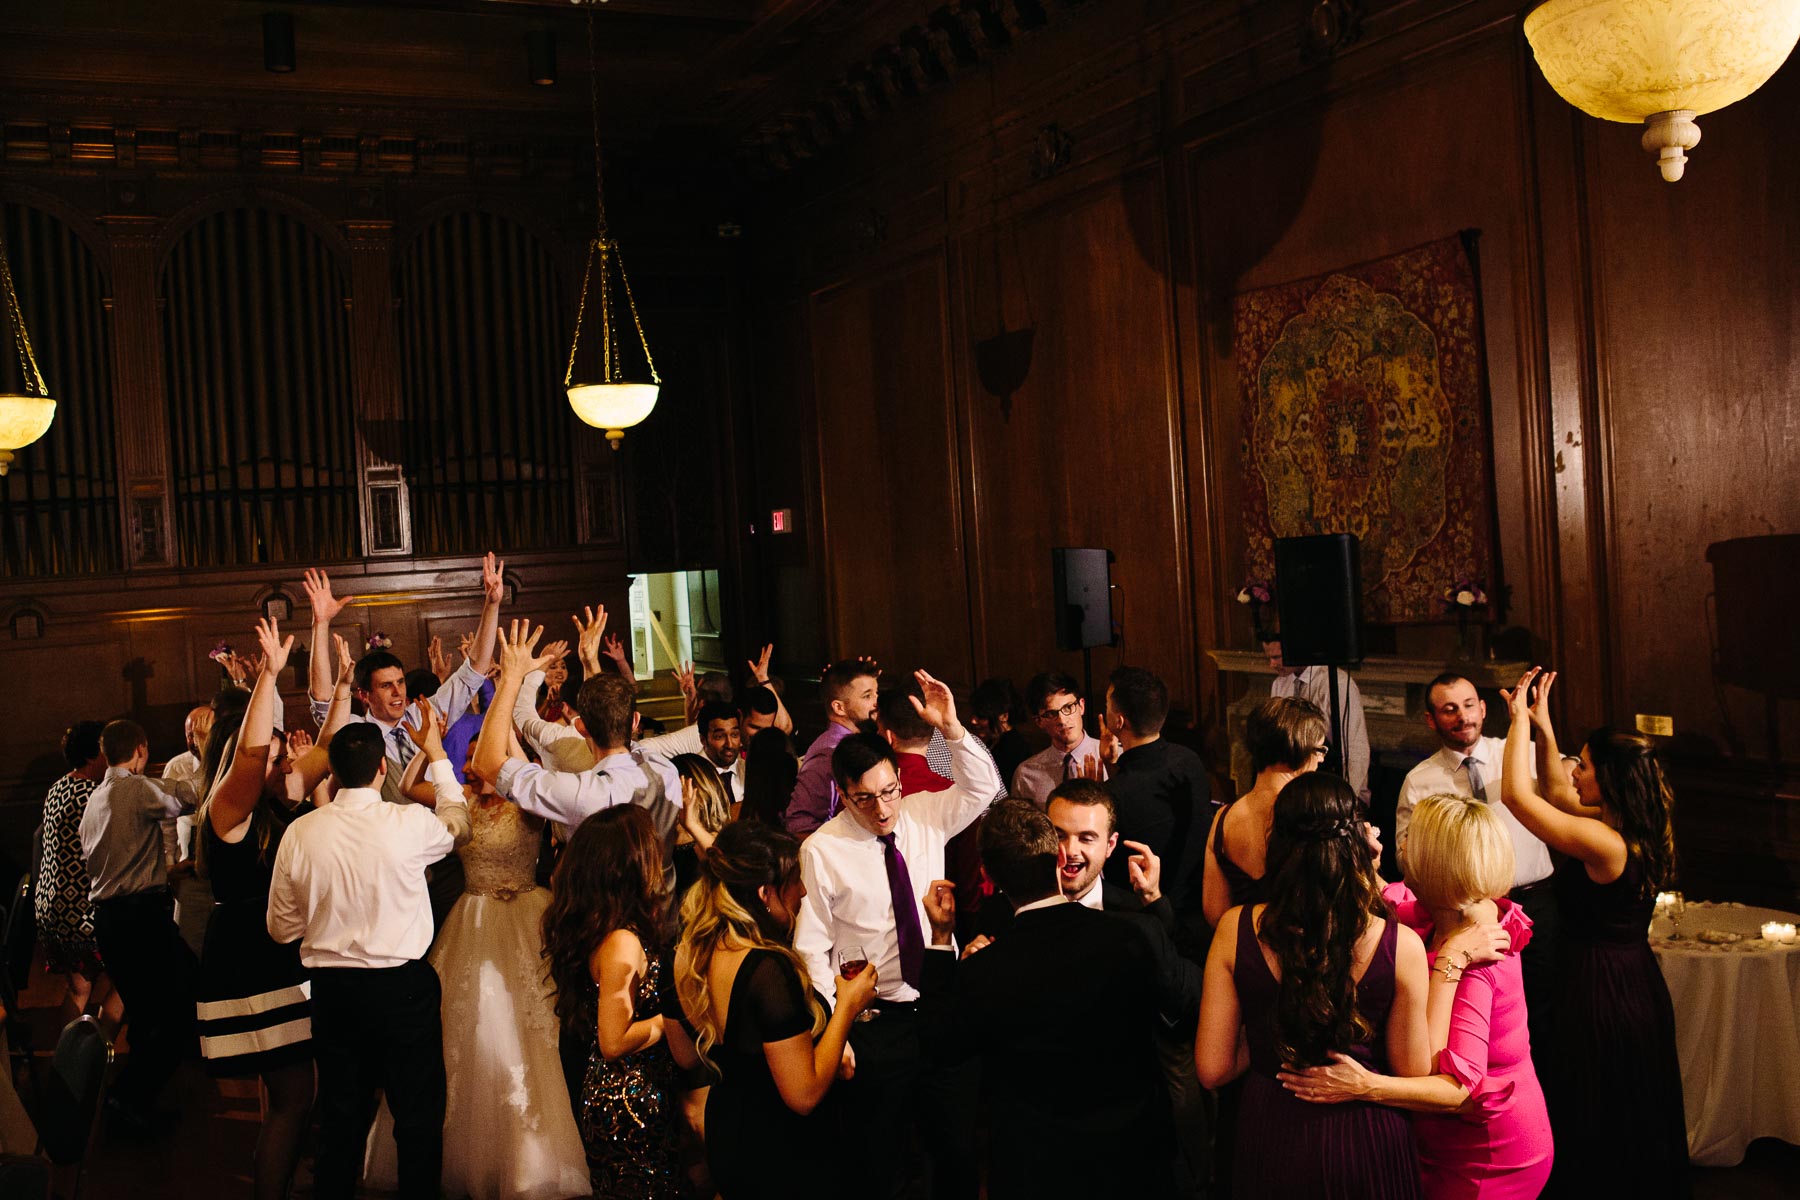 Lauren and George's wedding at the Dane Estate | Kelly Benvenuto Photography | Boston wedding photographer